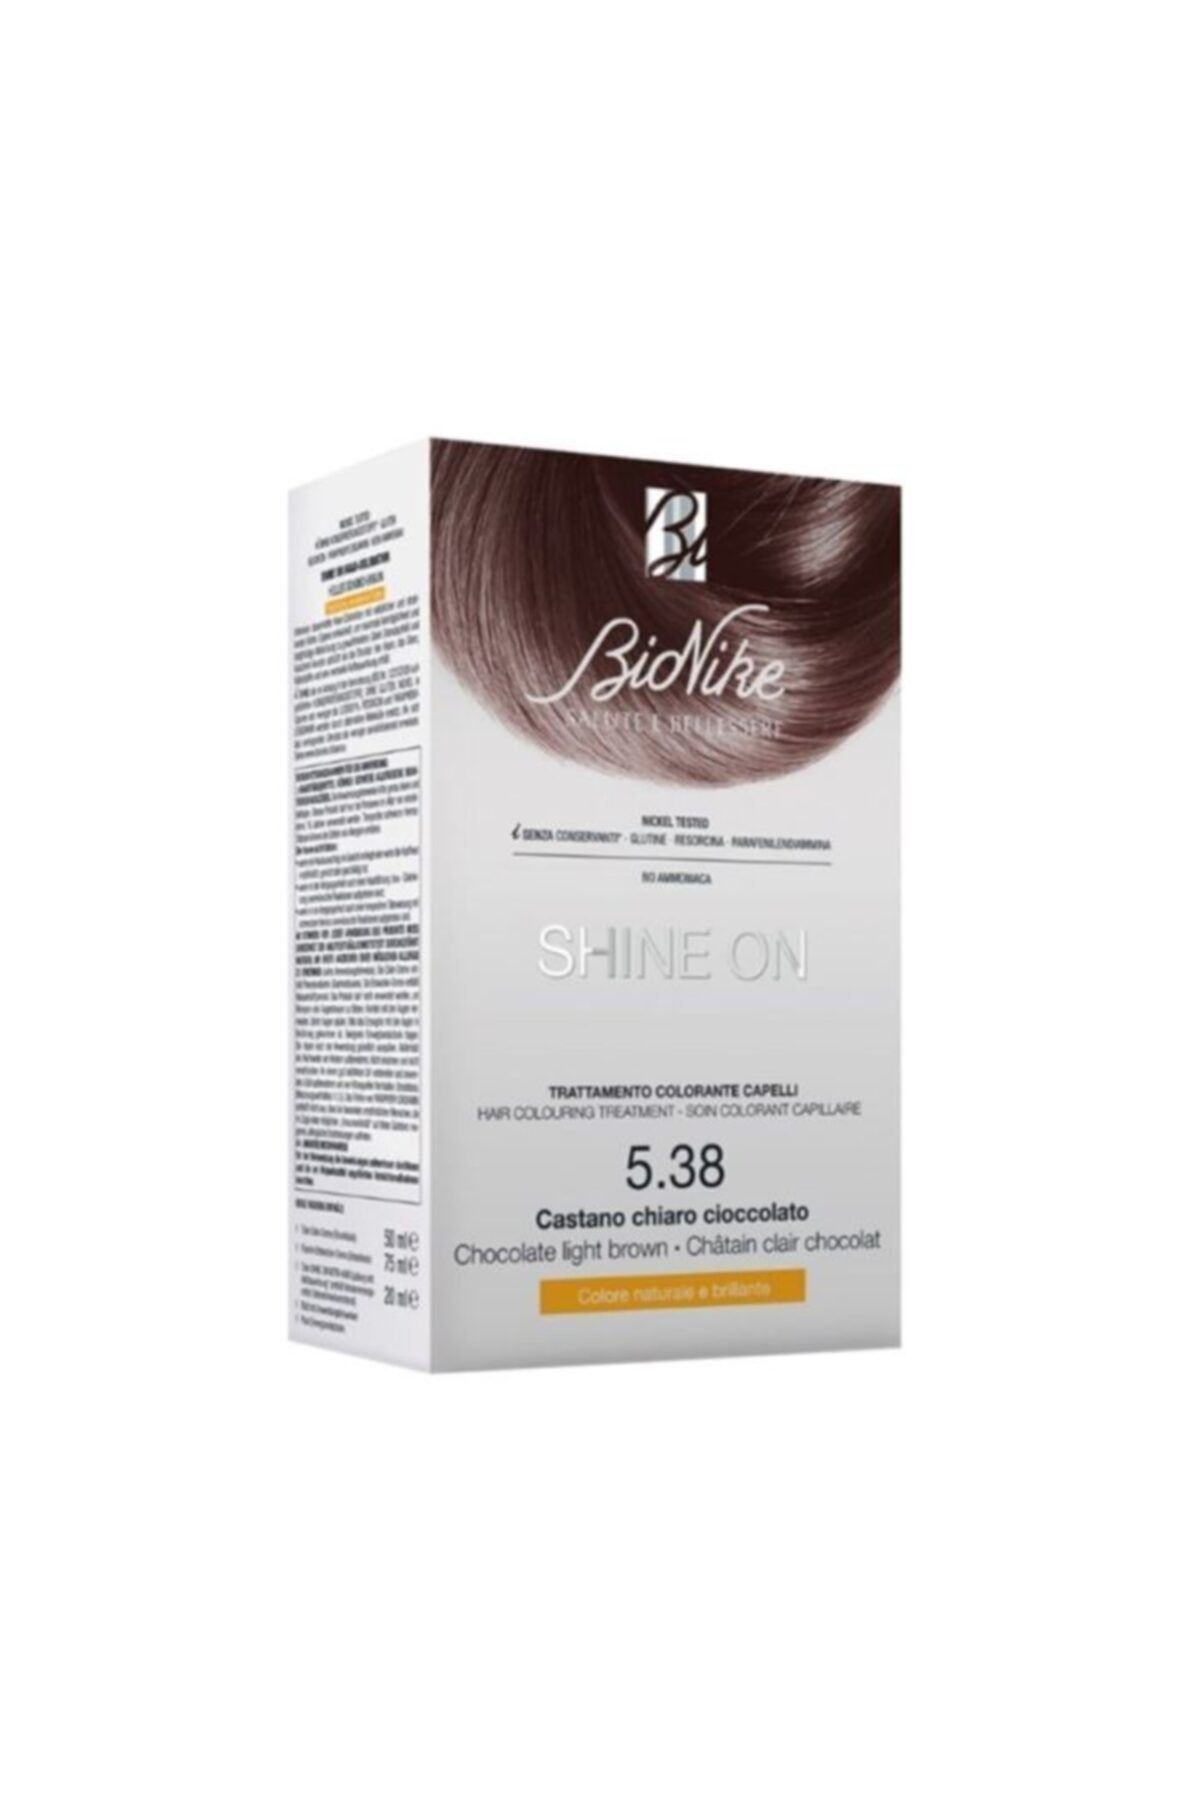 BioNike Shine On Saç Boyama Kiti No: 5.38 Açık Çikolata Kahve ( 1 ADET )